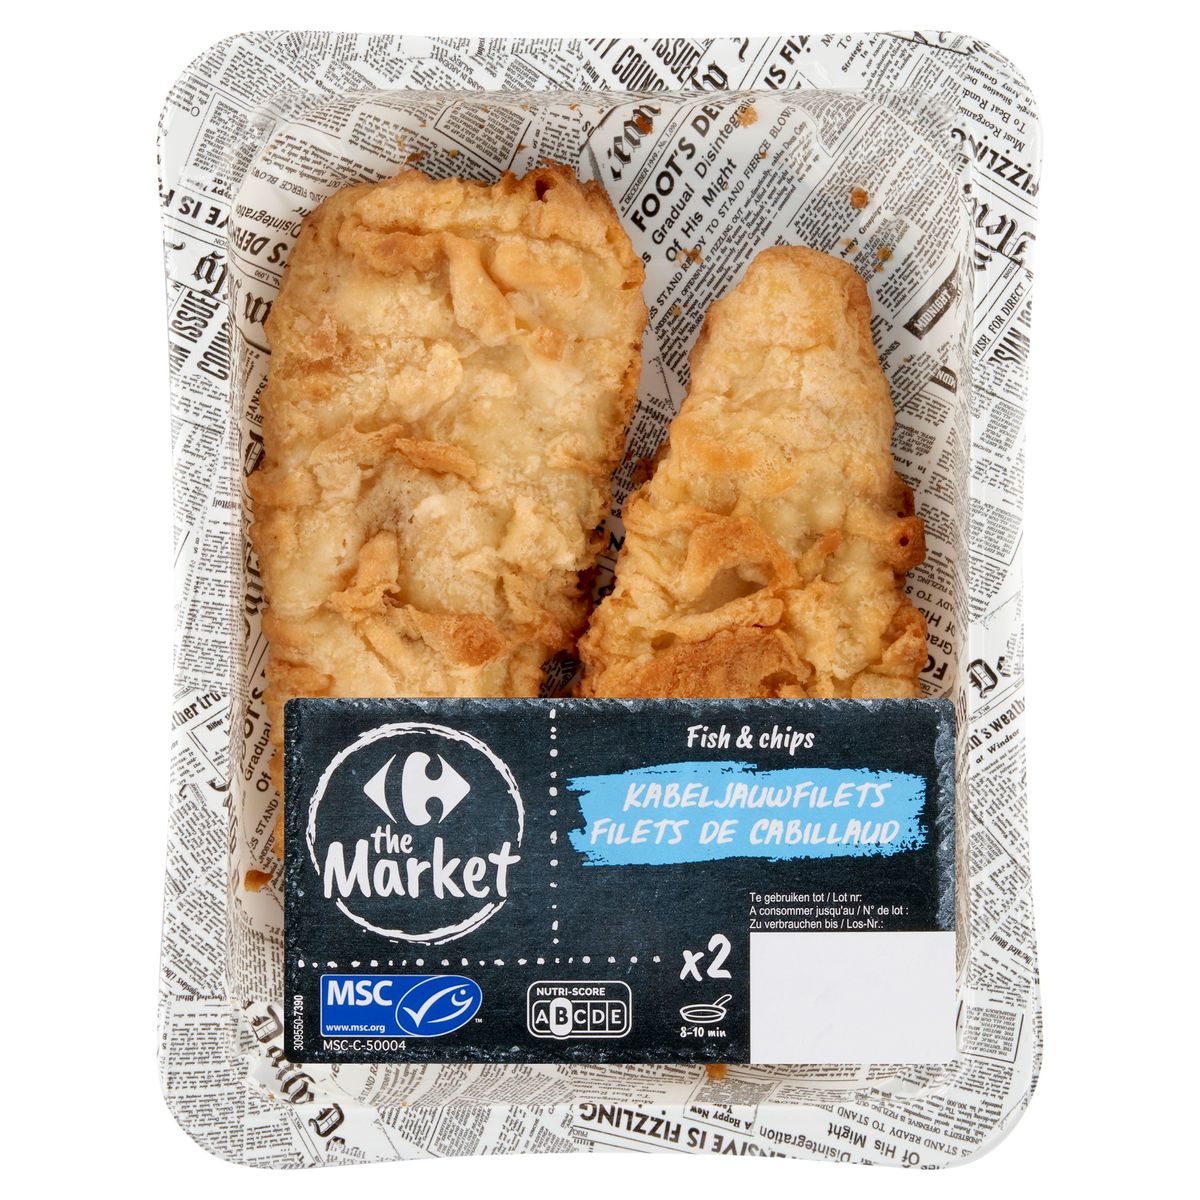 Carrefour The Market Fish & Chips Kabeljauwfilets 2 Stuks 200 g